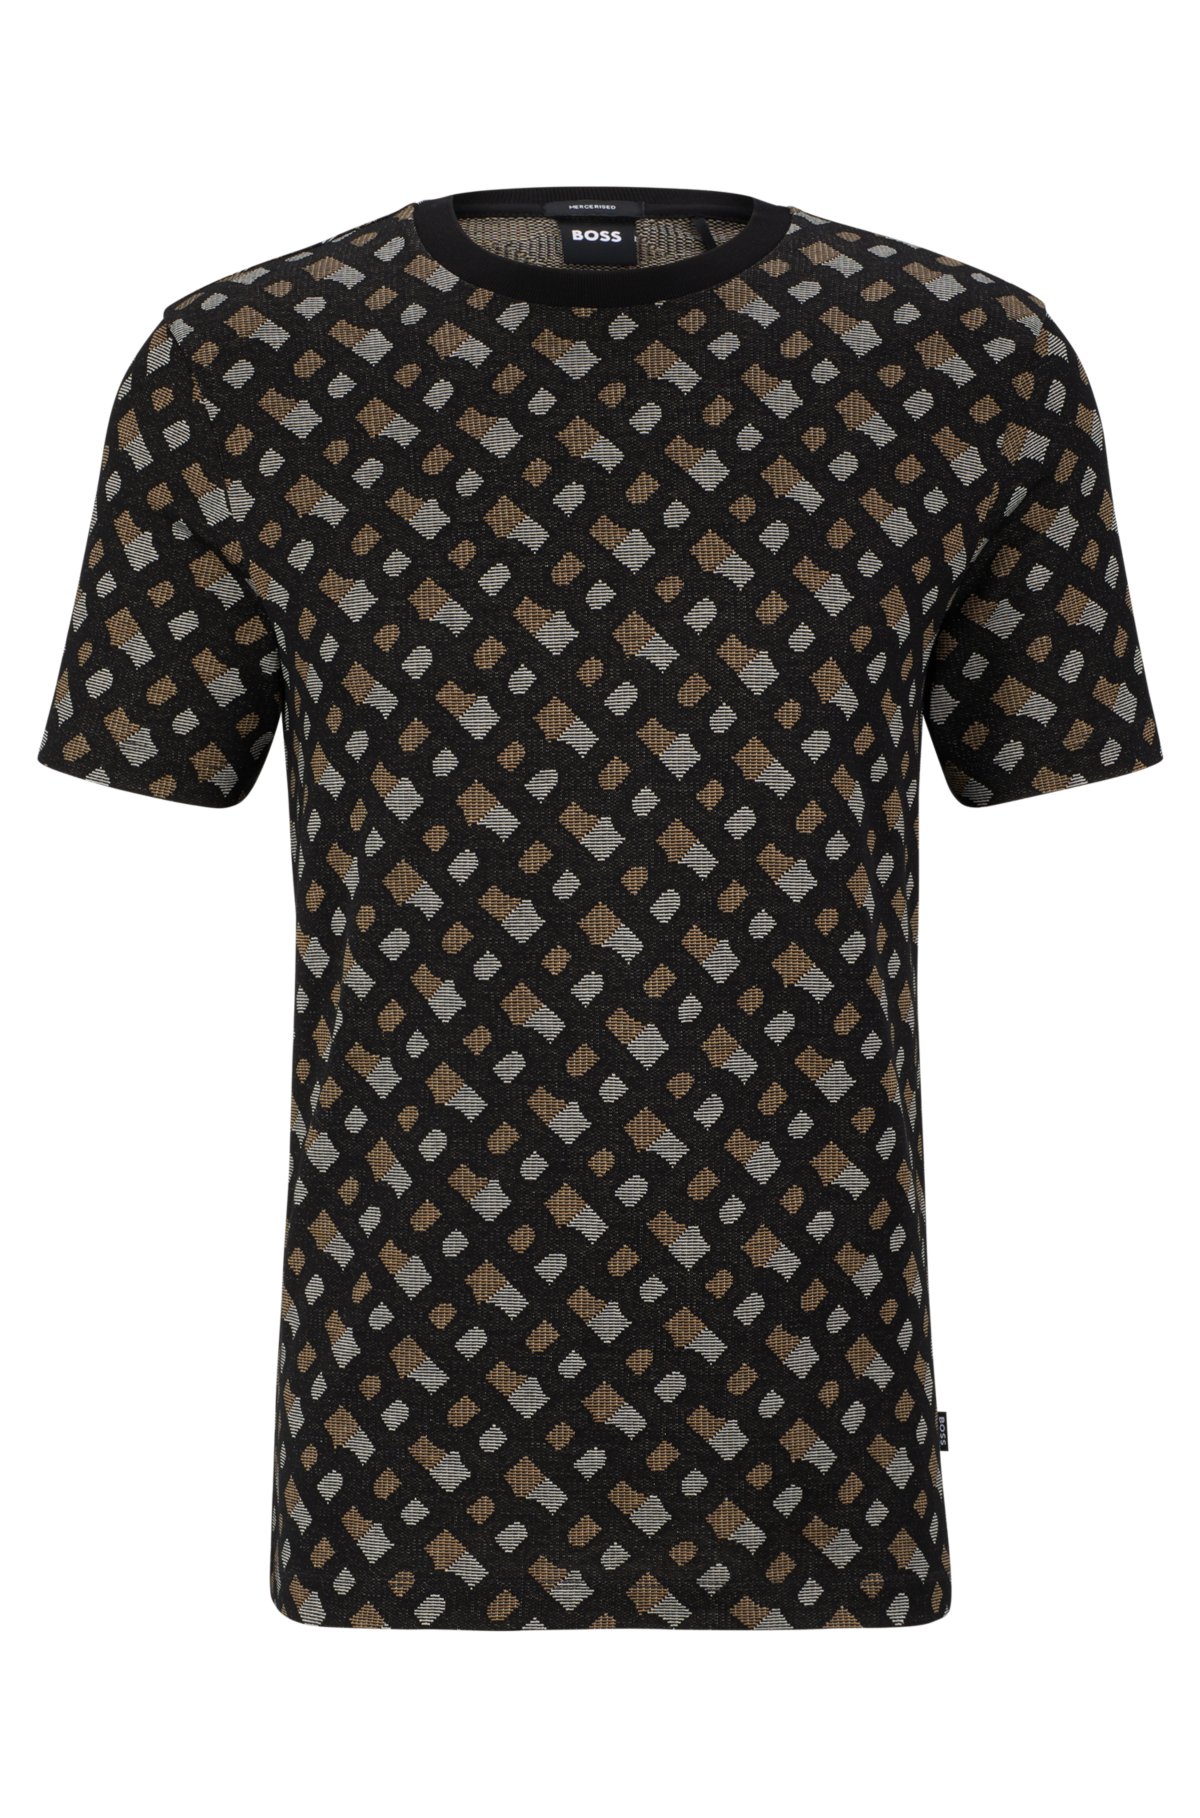 LOUIS VUITTON Blue Monogram T-Shirt - Size Medium - Retail $1200